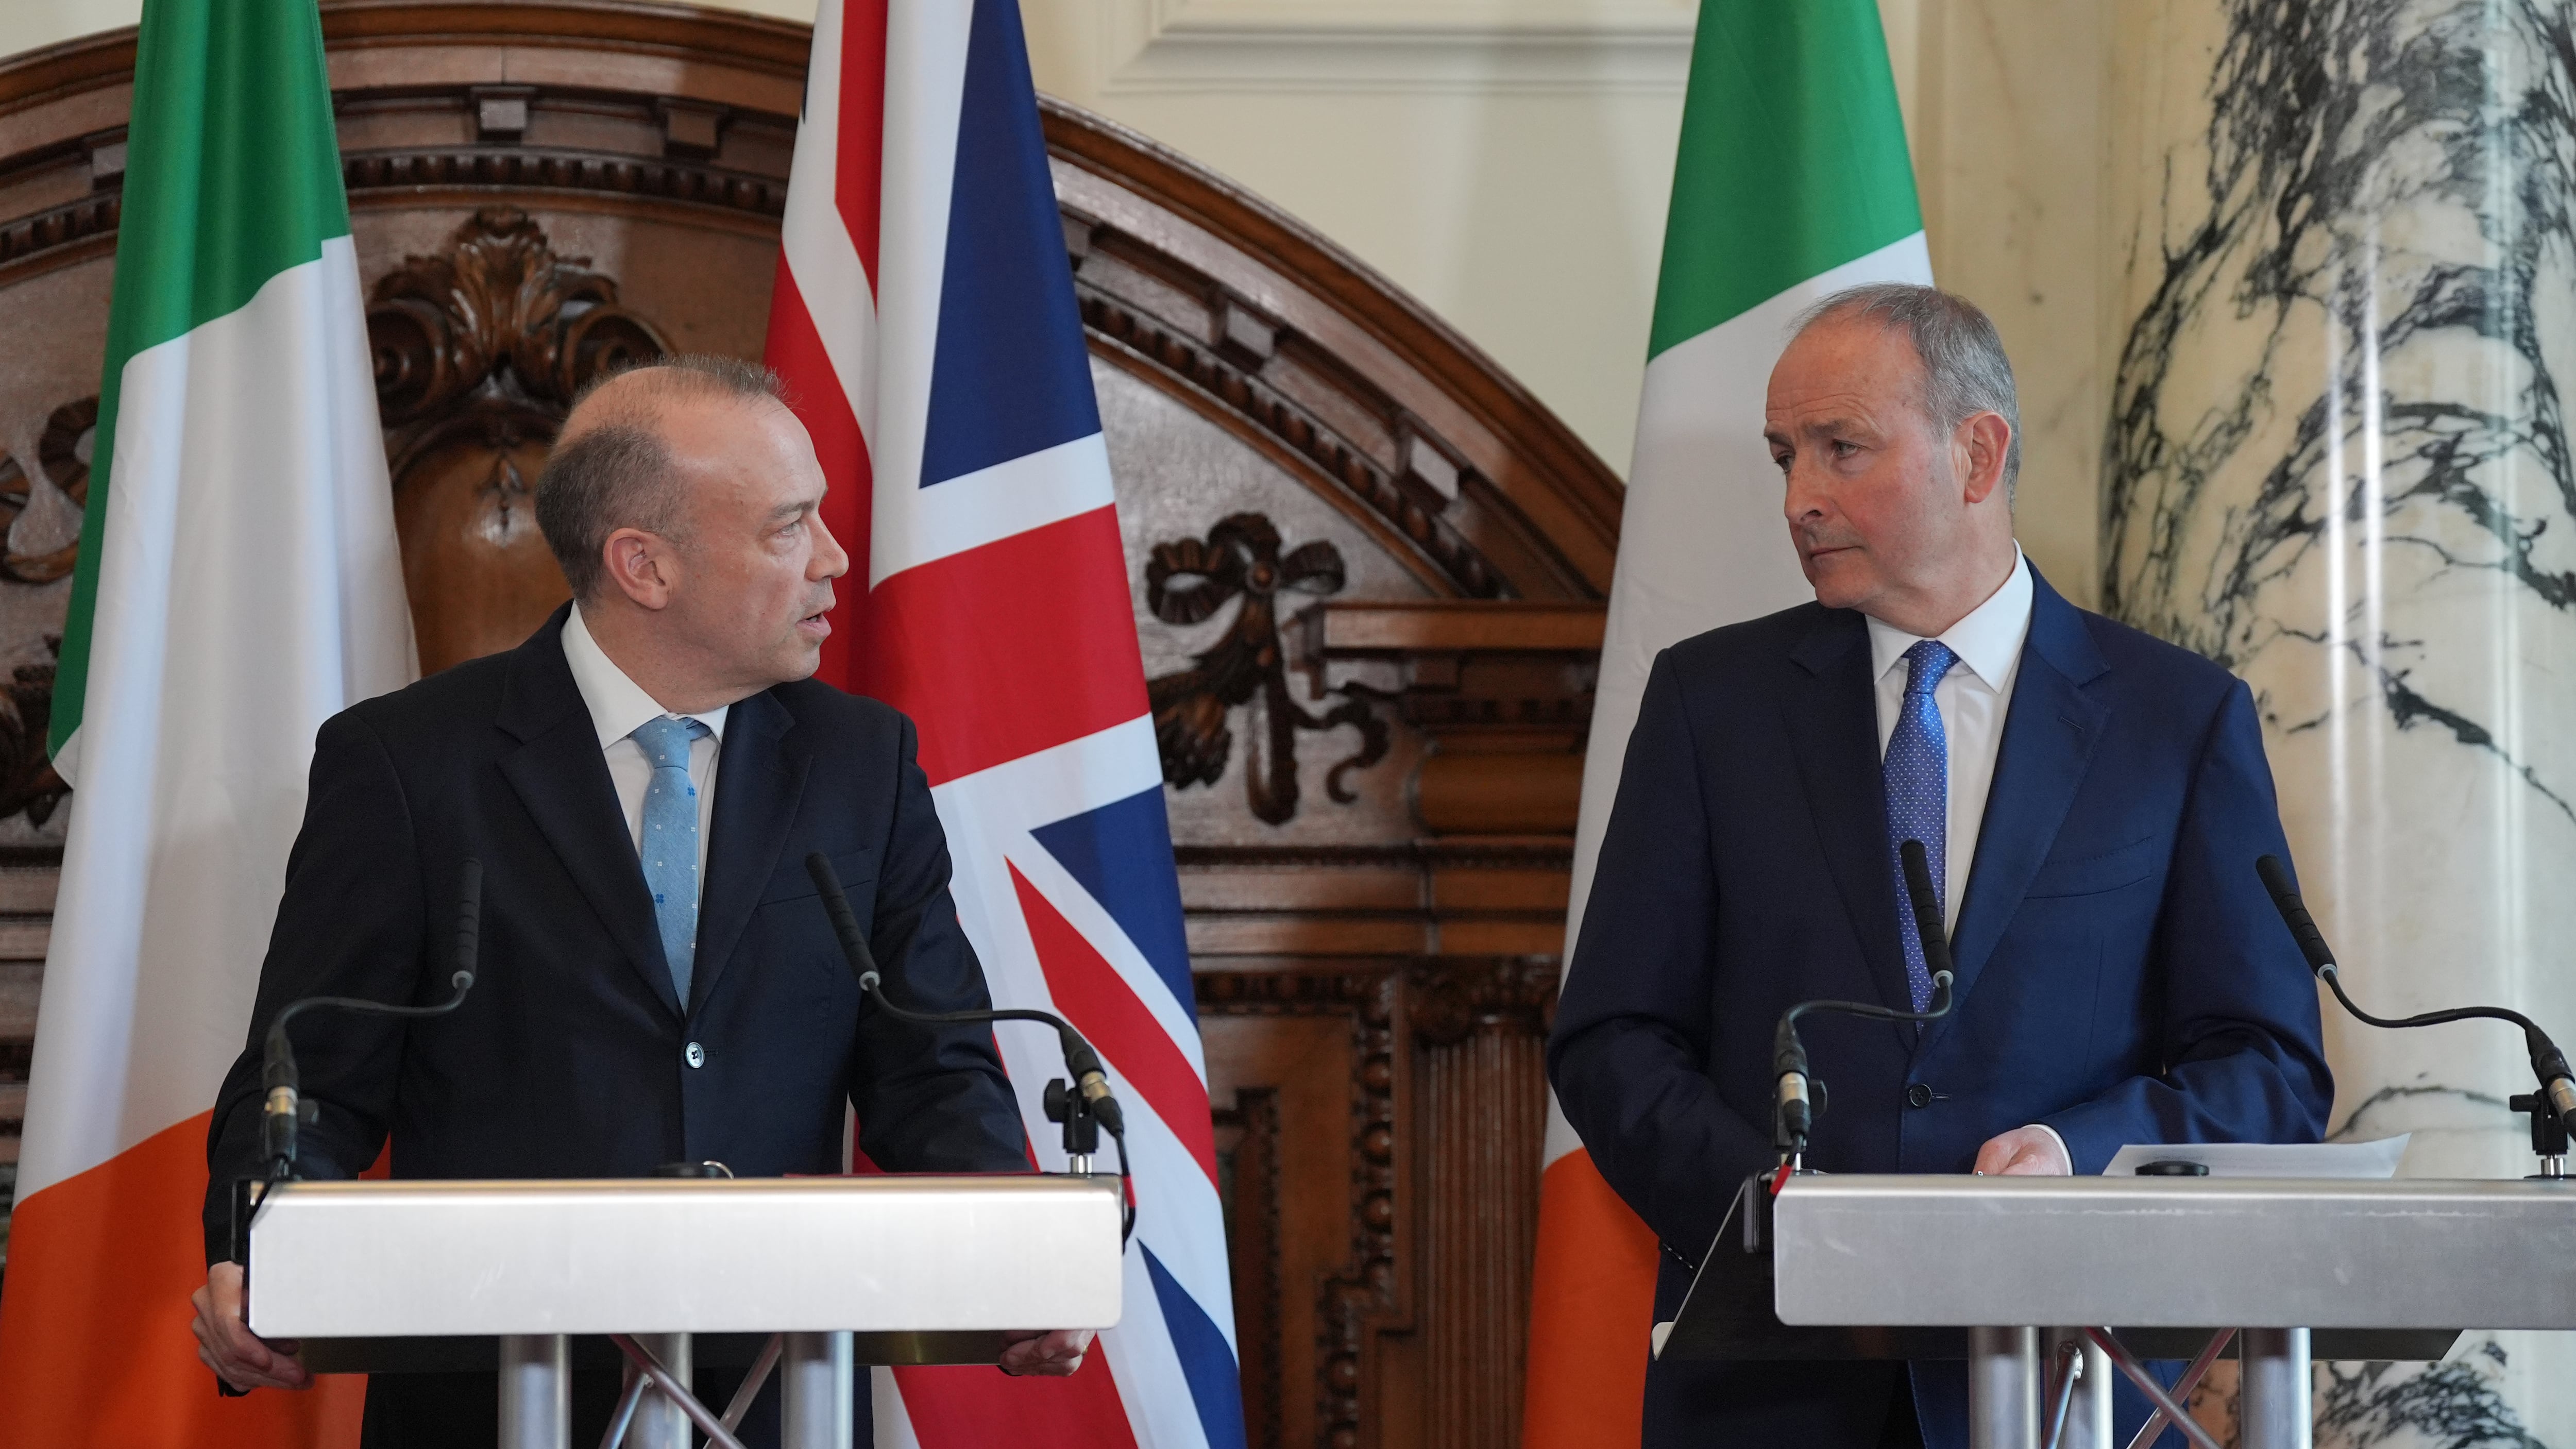 Northern Ireland Secretary Chris Heaton-Harris and Tanaiste Micheal Martin during the British-Irish Intergovernmental Conference press conference